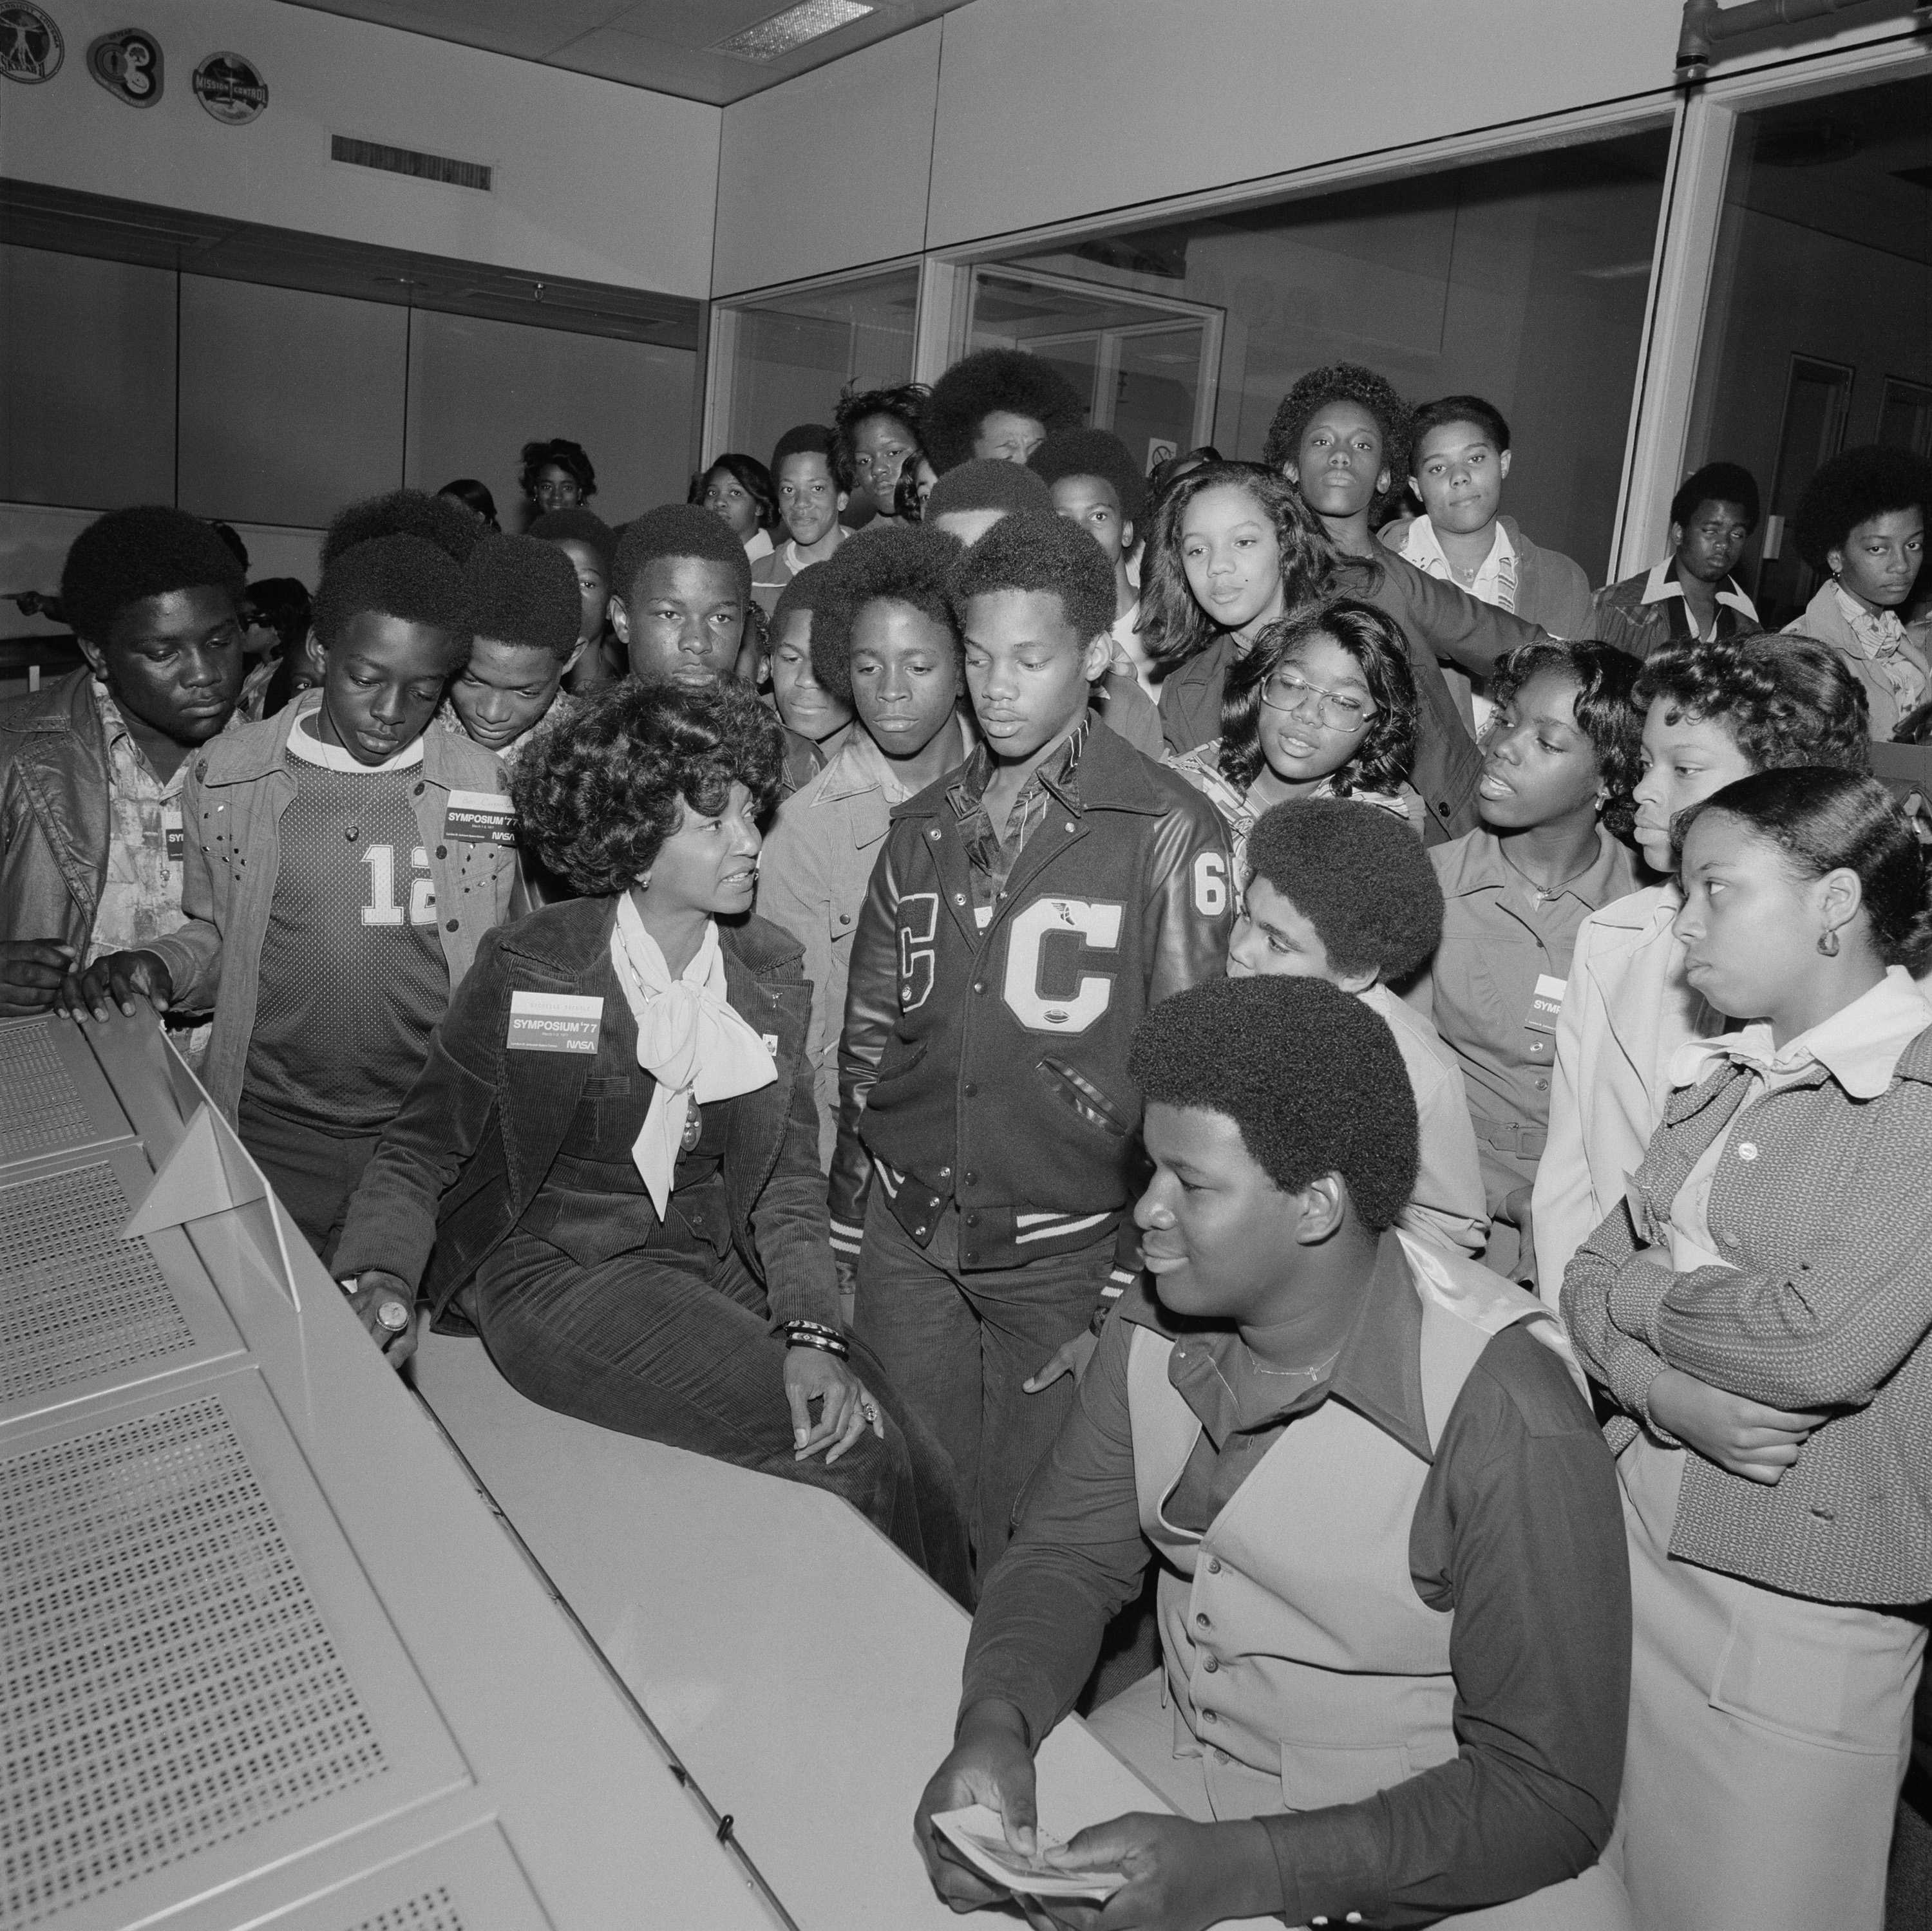 Nichelle Nichols talking while students stand around her in a school auditorium.